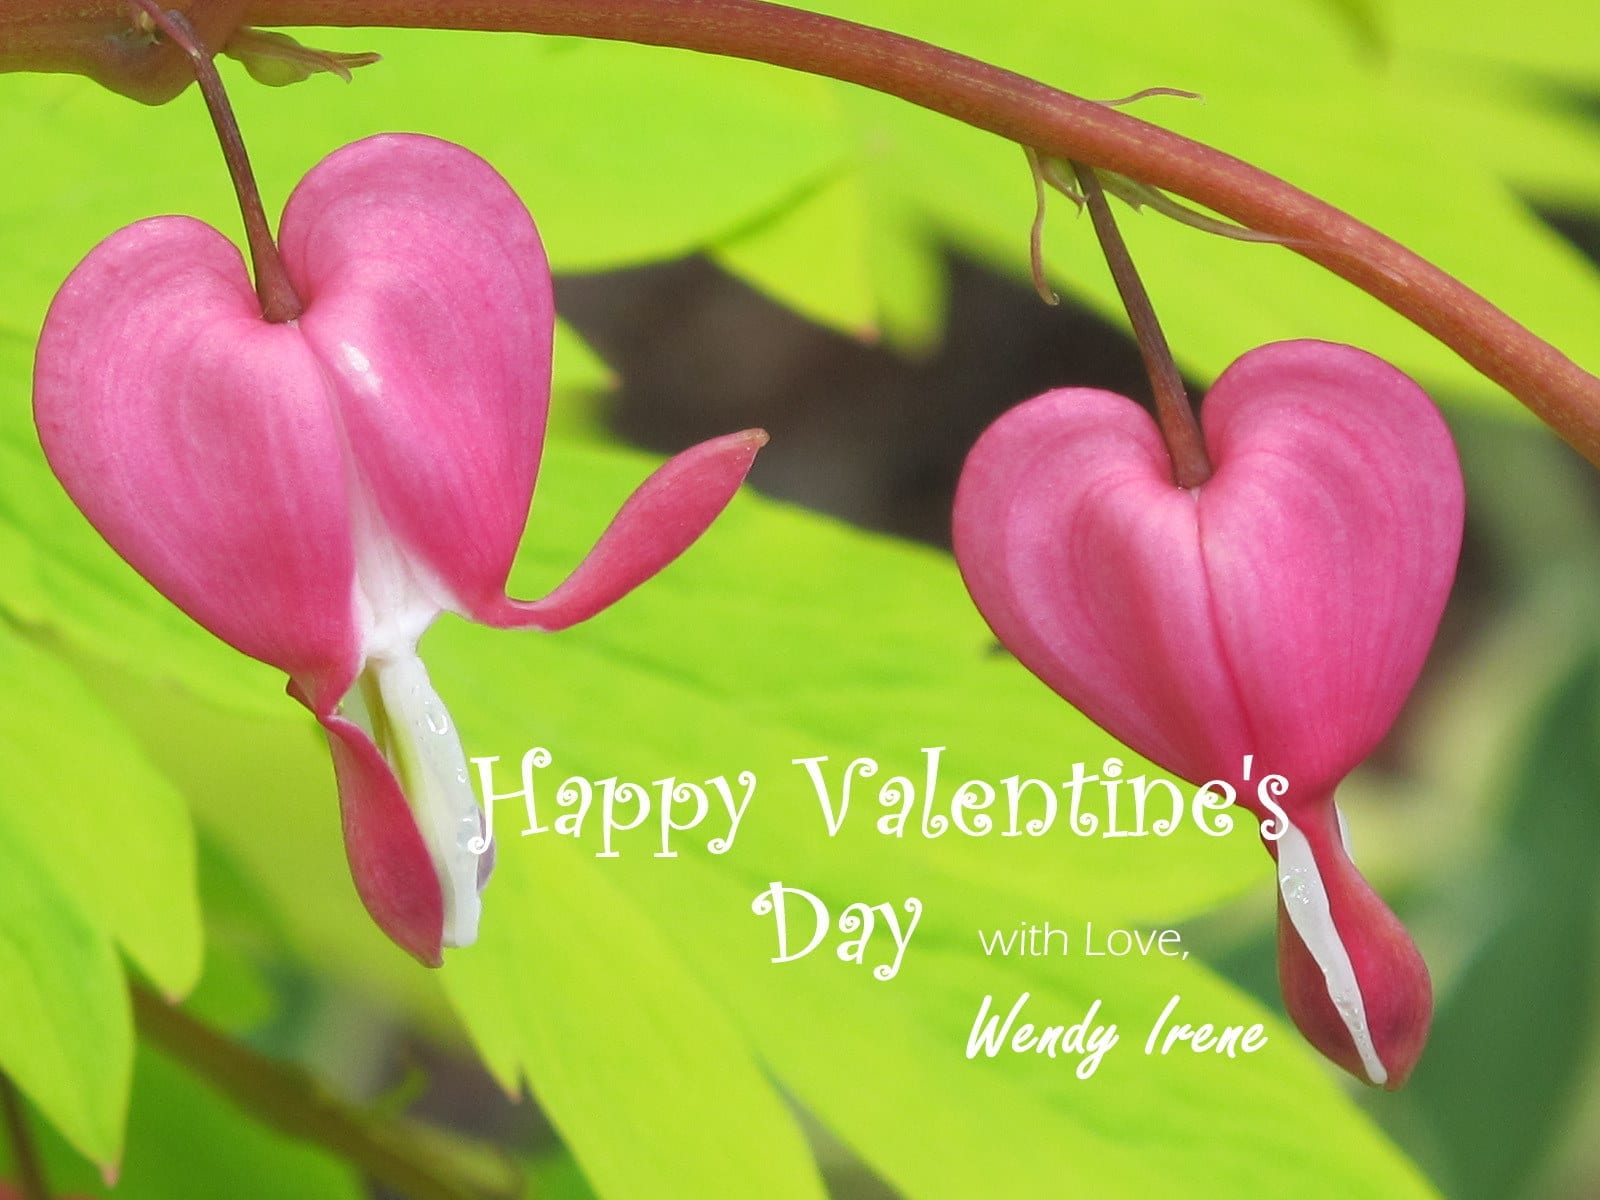 Happy Valentine’s Day with Love 2011